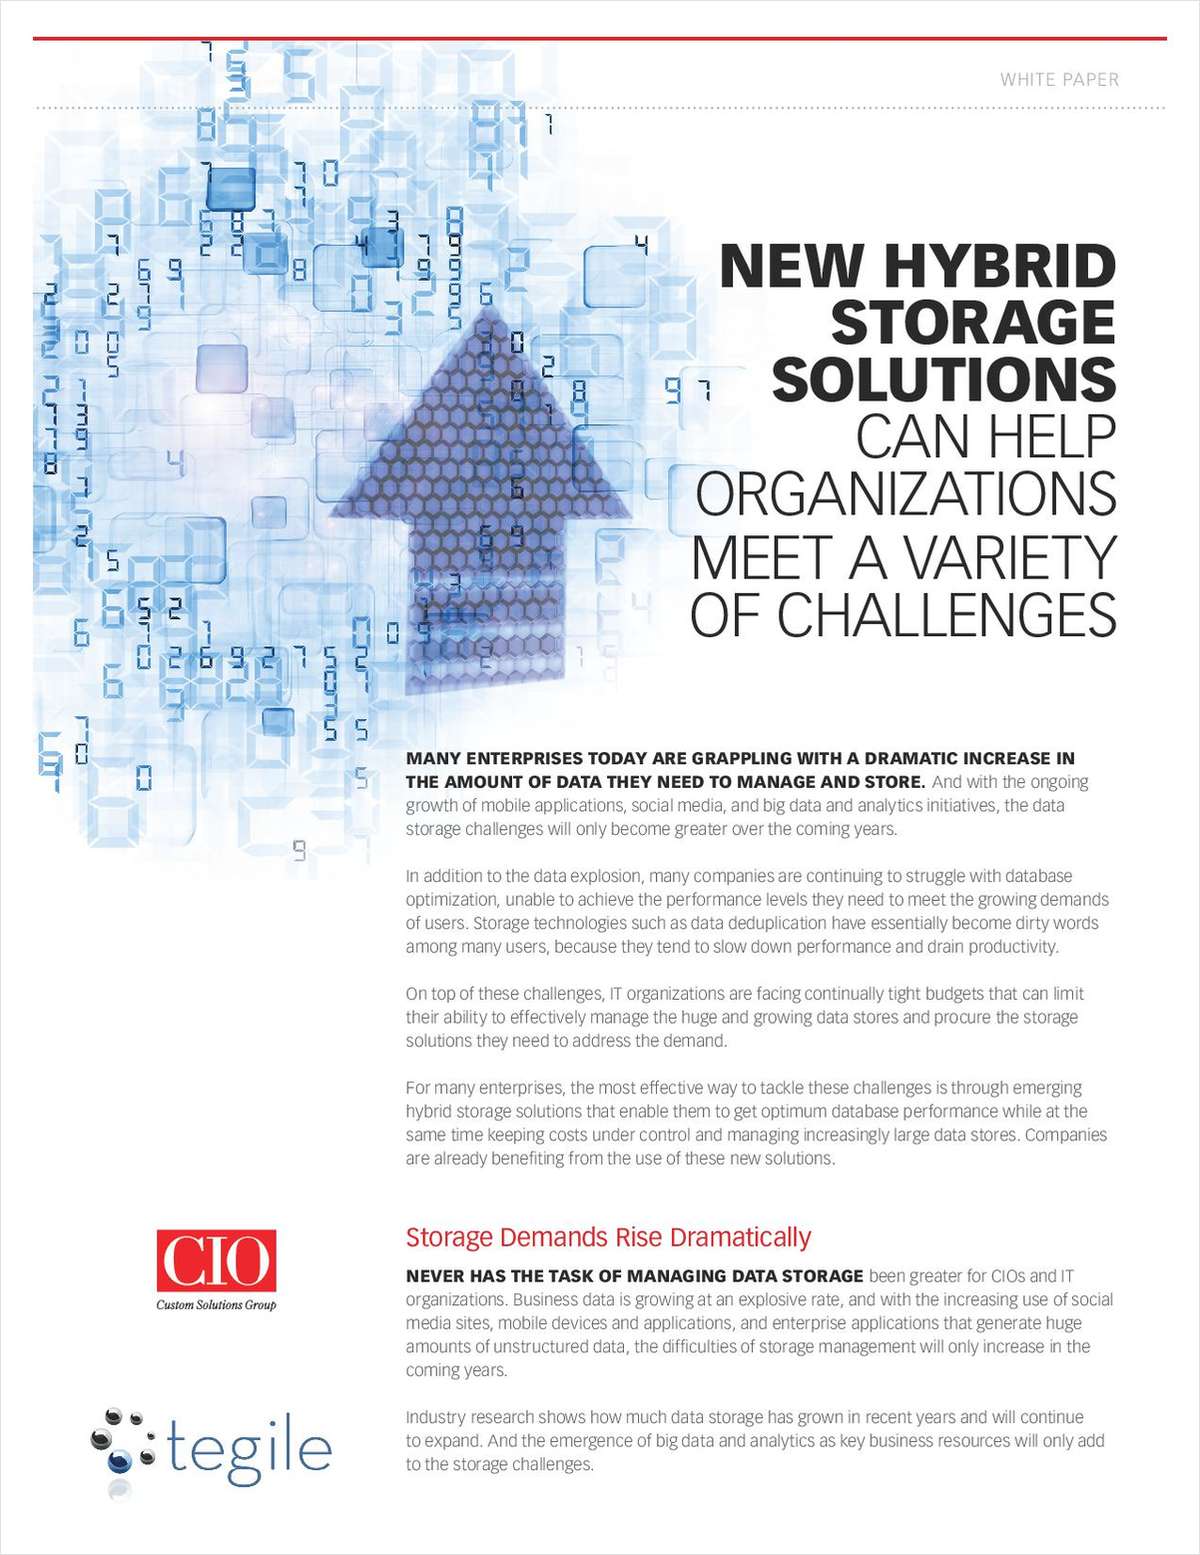 CIO: New Hybrid Storage Solutions